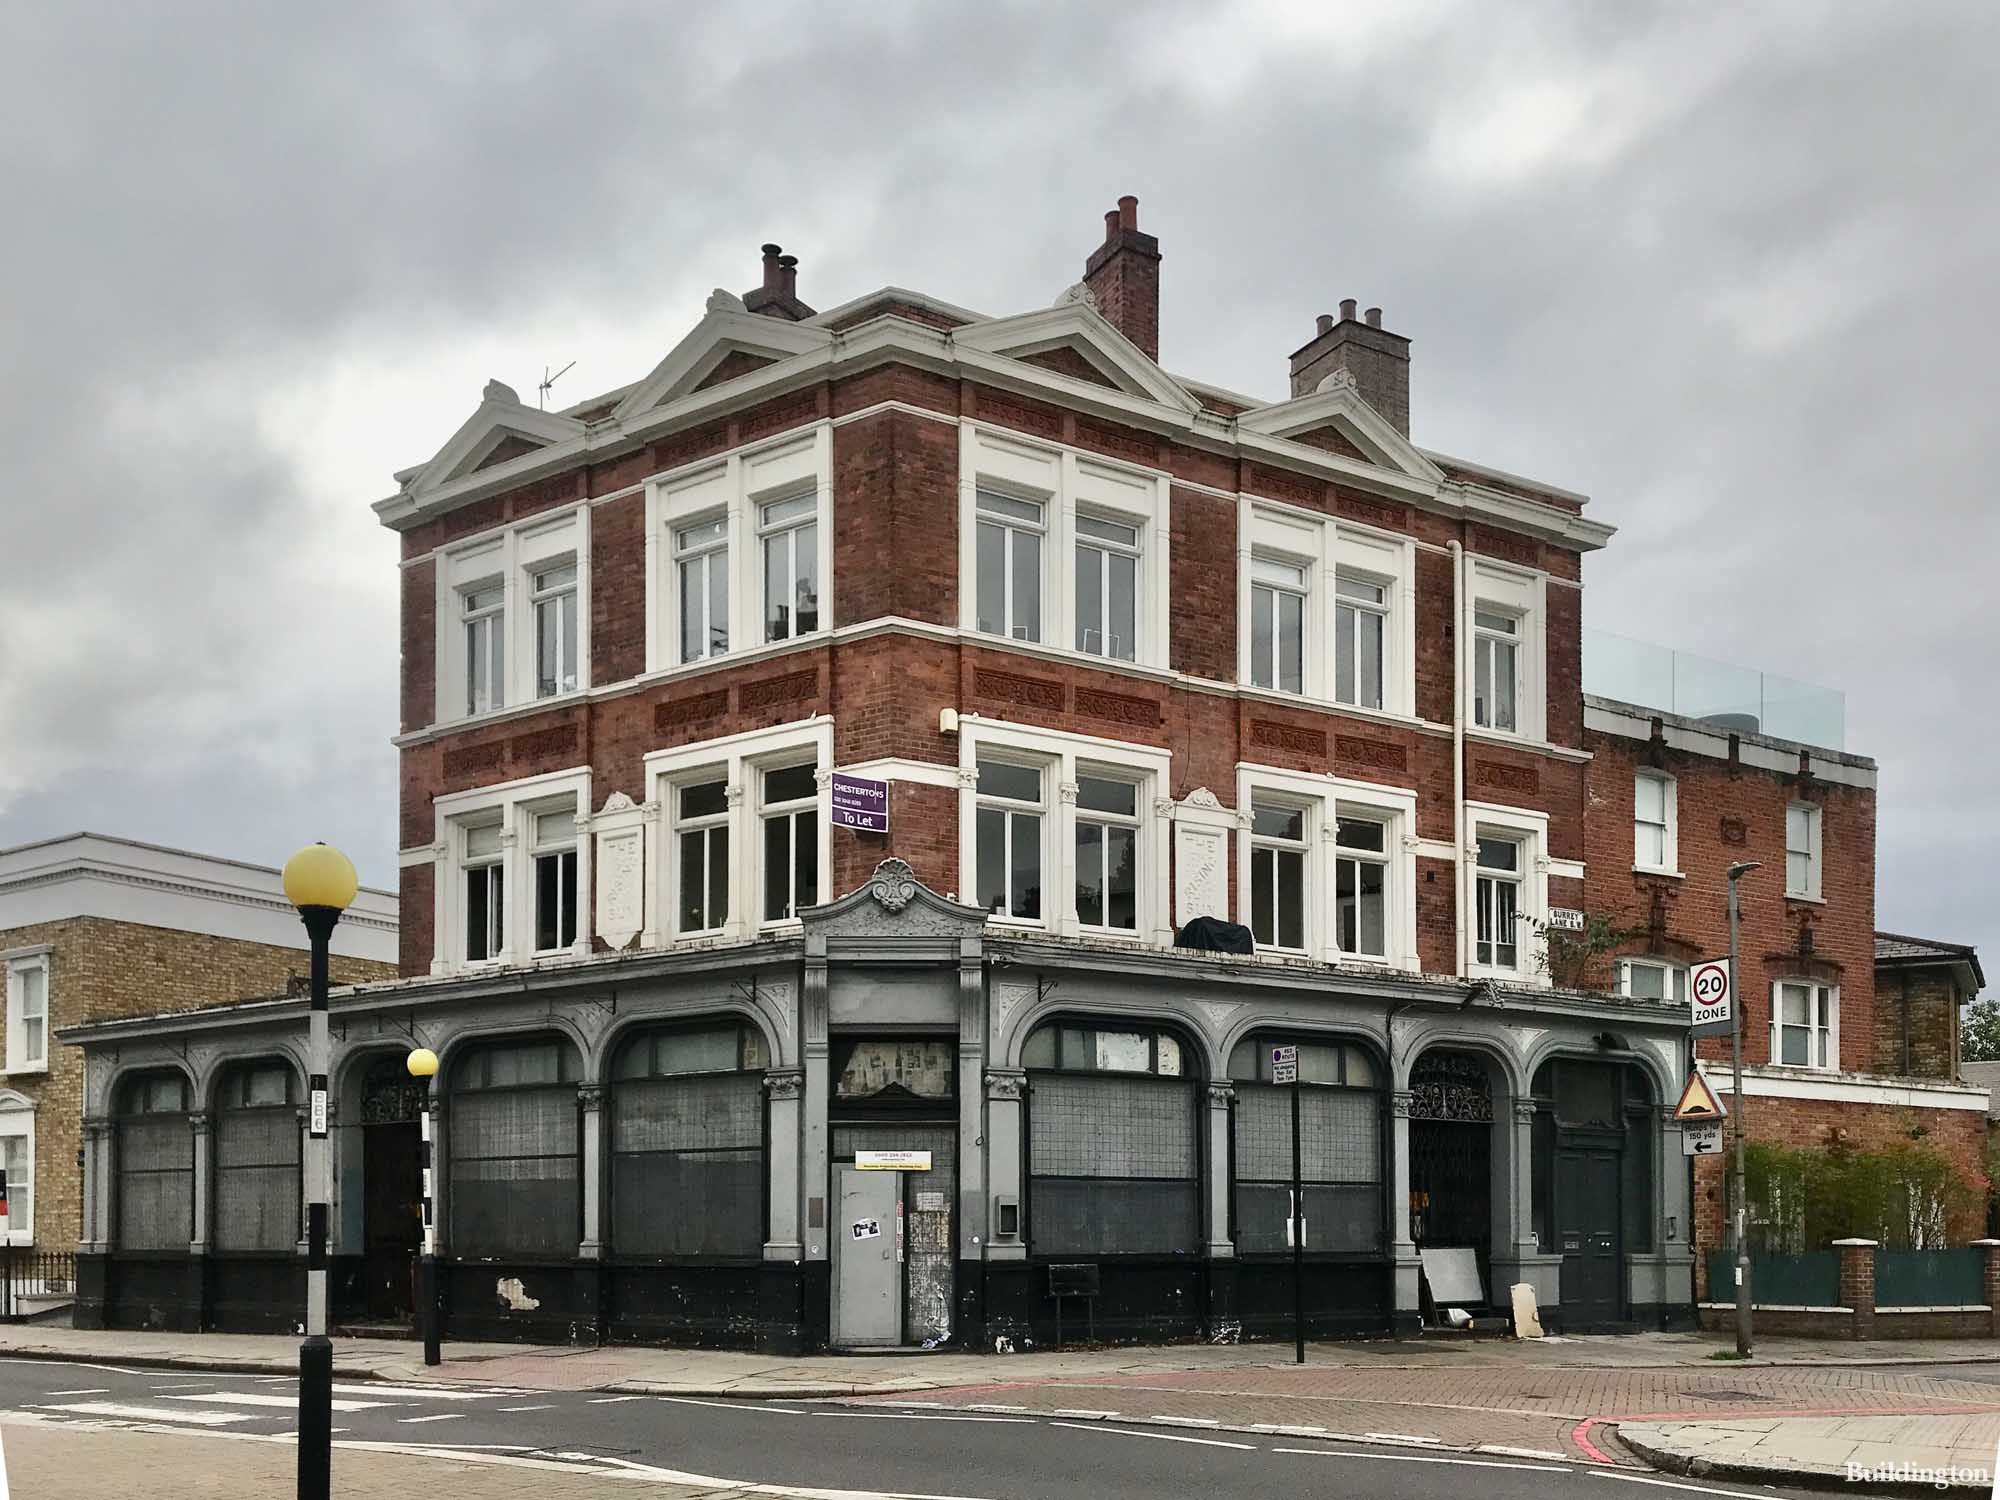 The former Prince of Wales pub building at 186 Battersea Bridge Road.